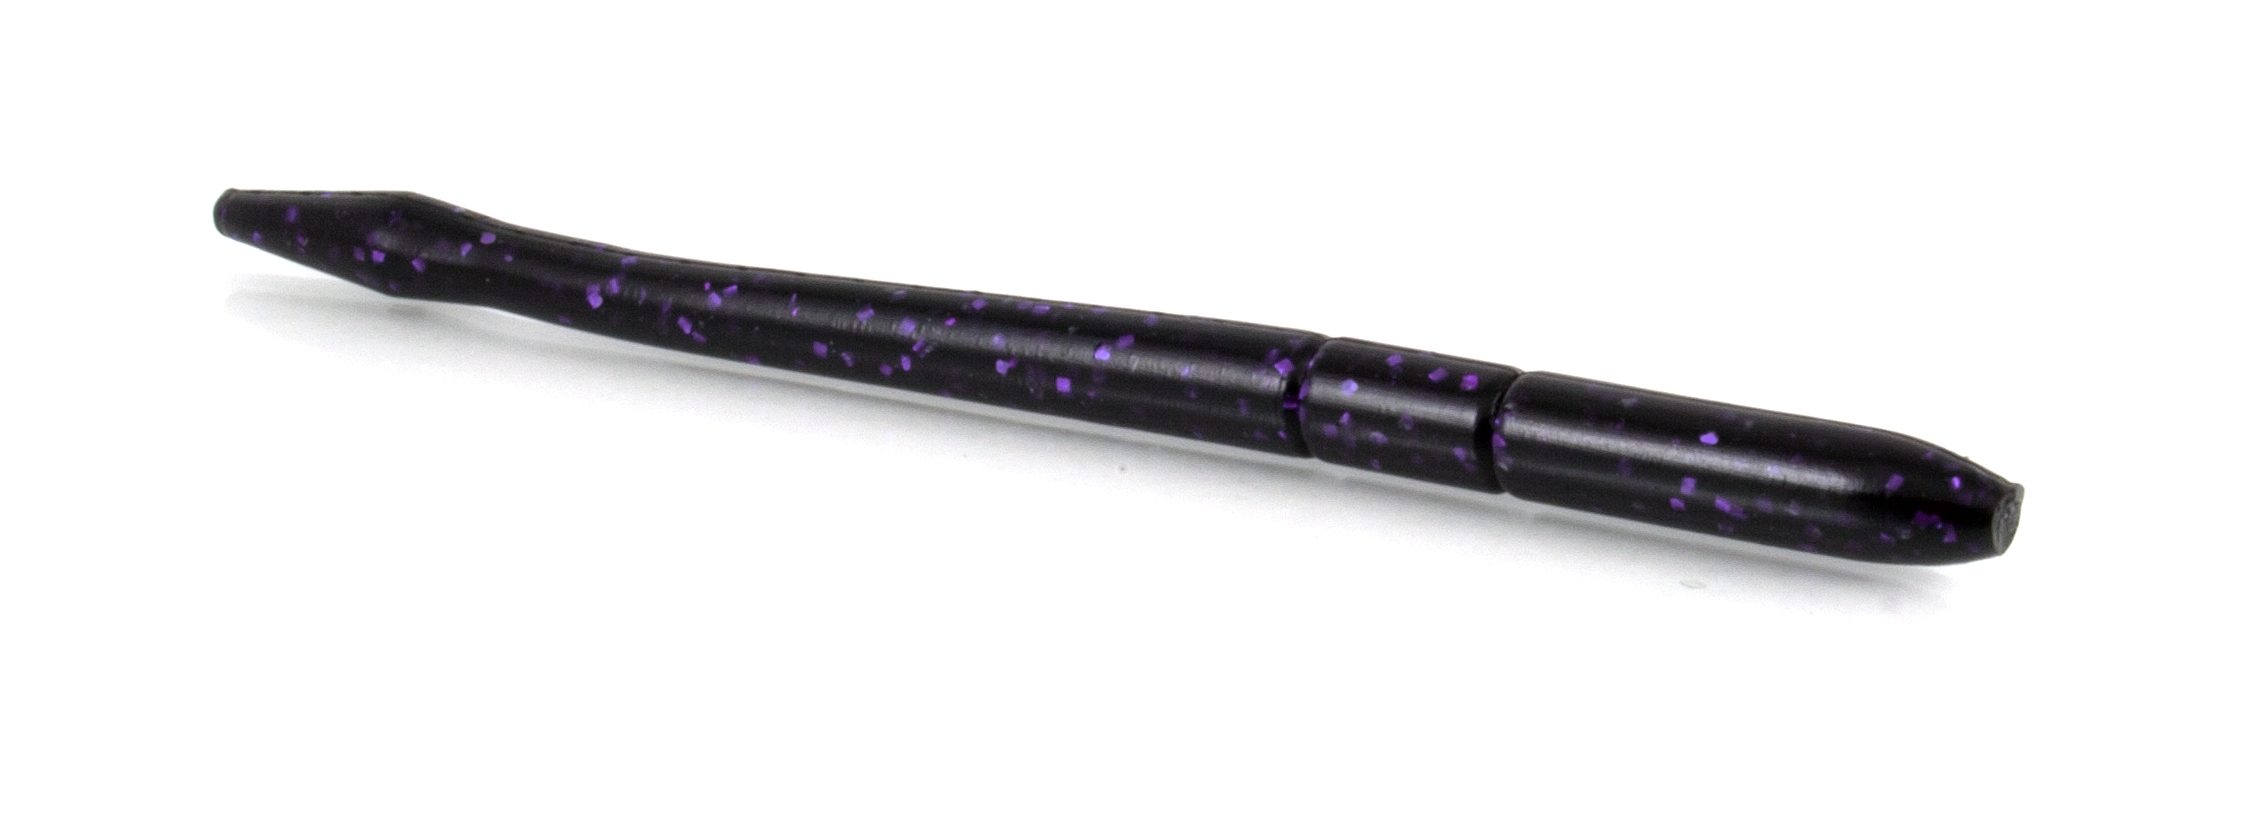 Softbait Black Flagg FNSS Worm S 4.95" col. #045F Black Purple Flk